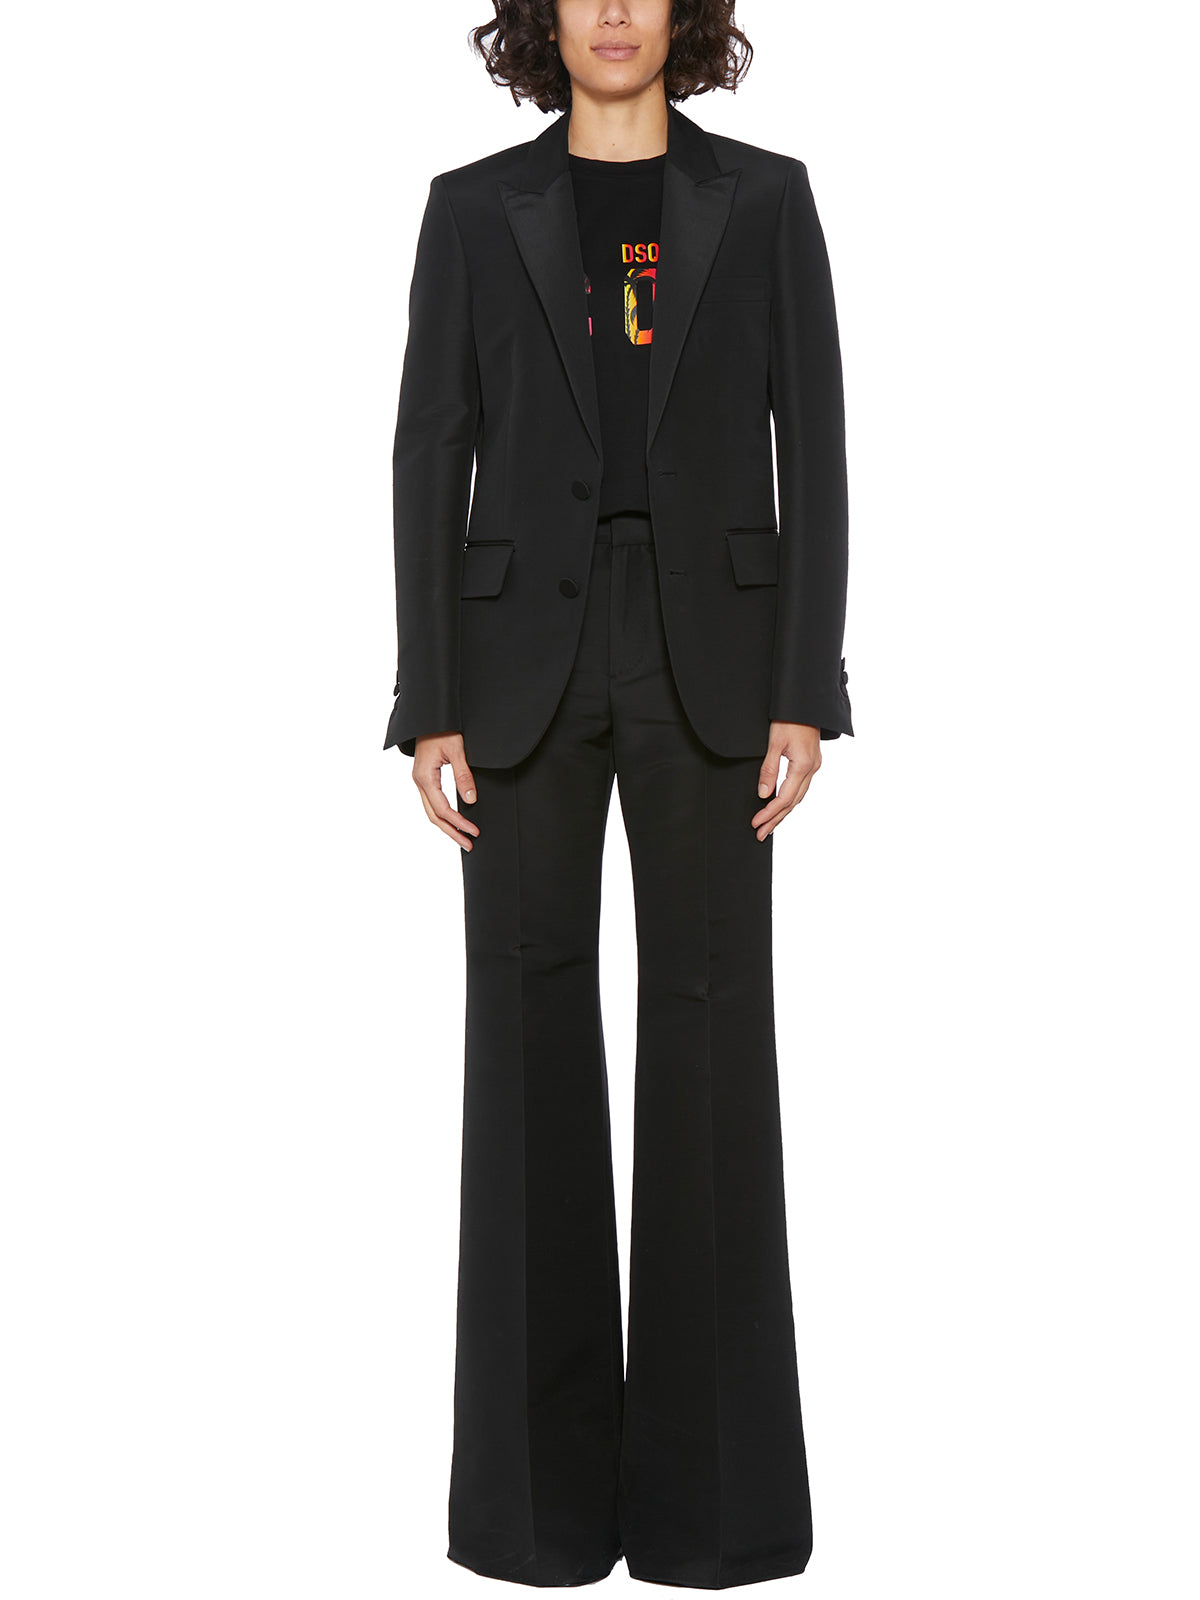 DSQUARED2 Elegant Black Wool Blend Dress for Women - SS23 Collection